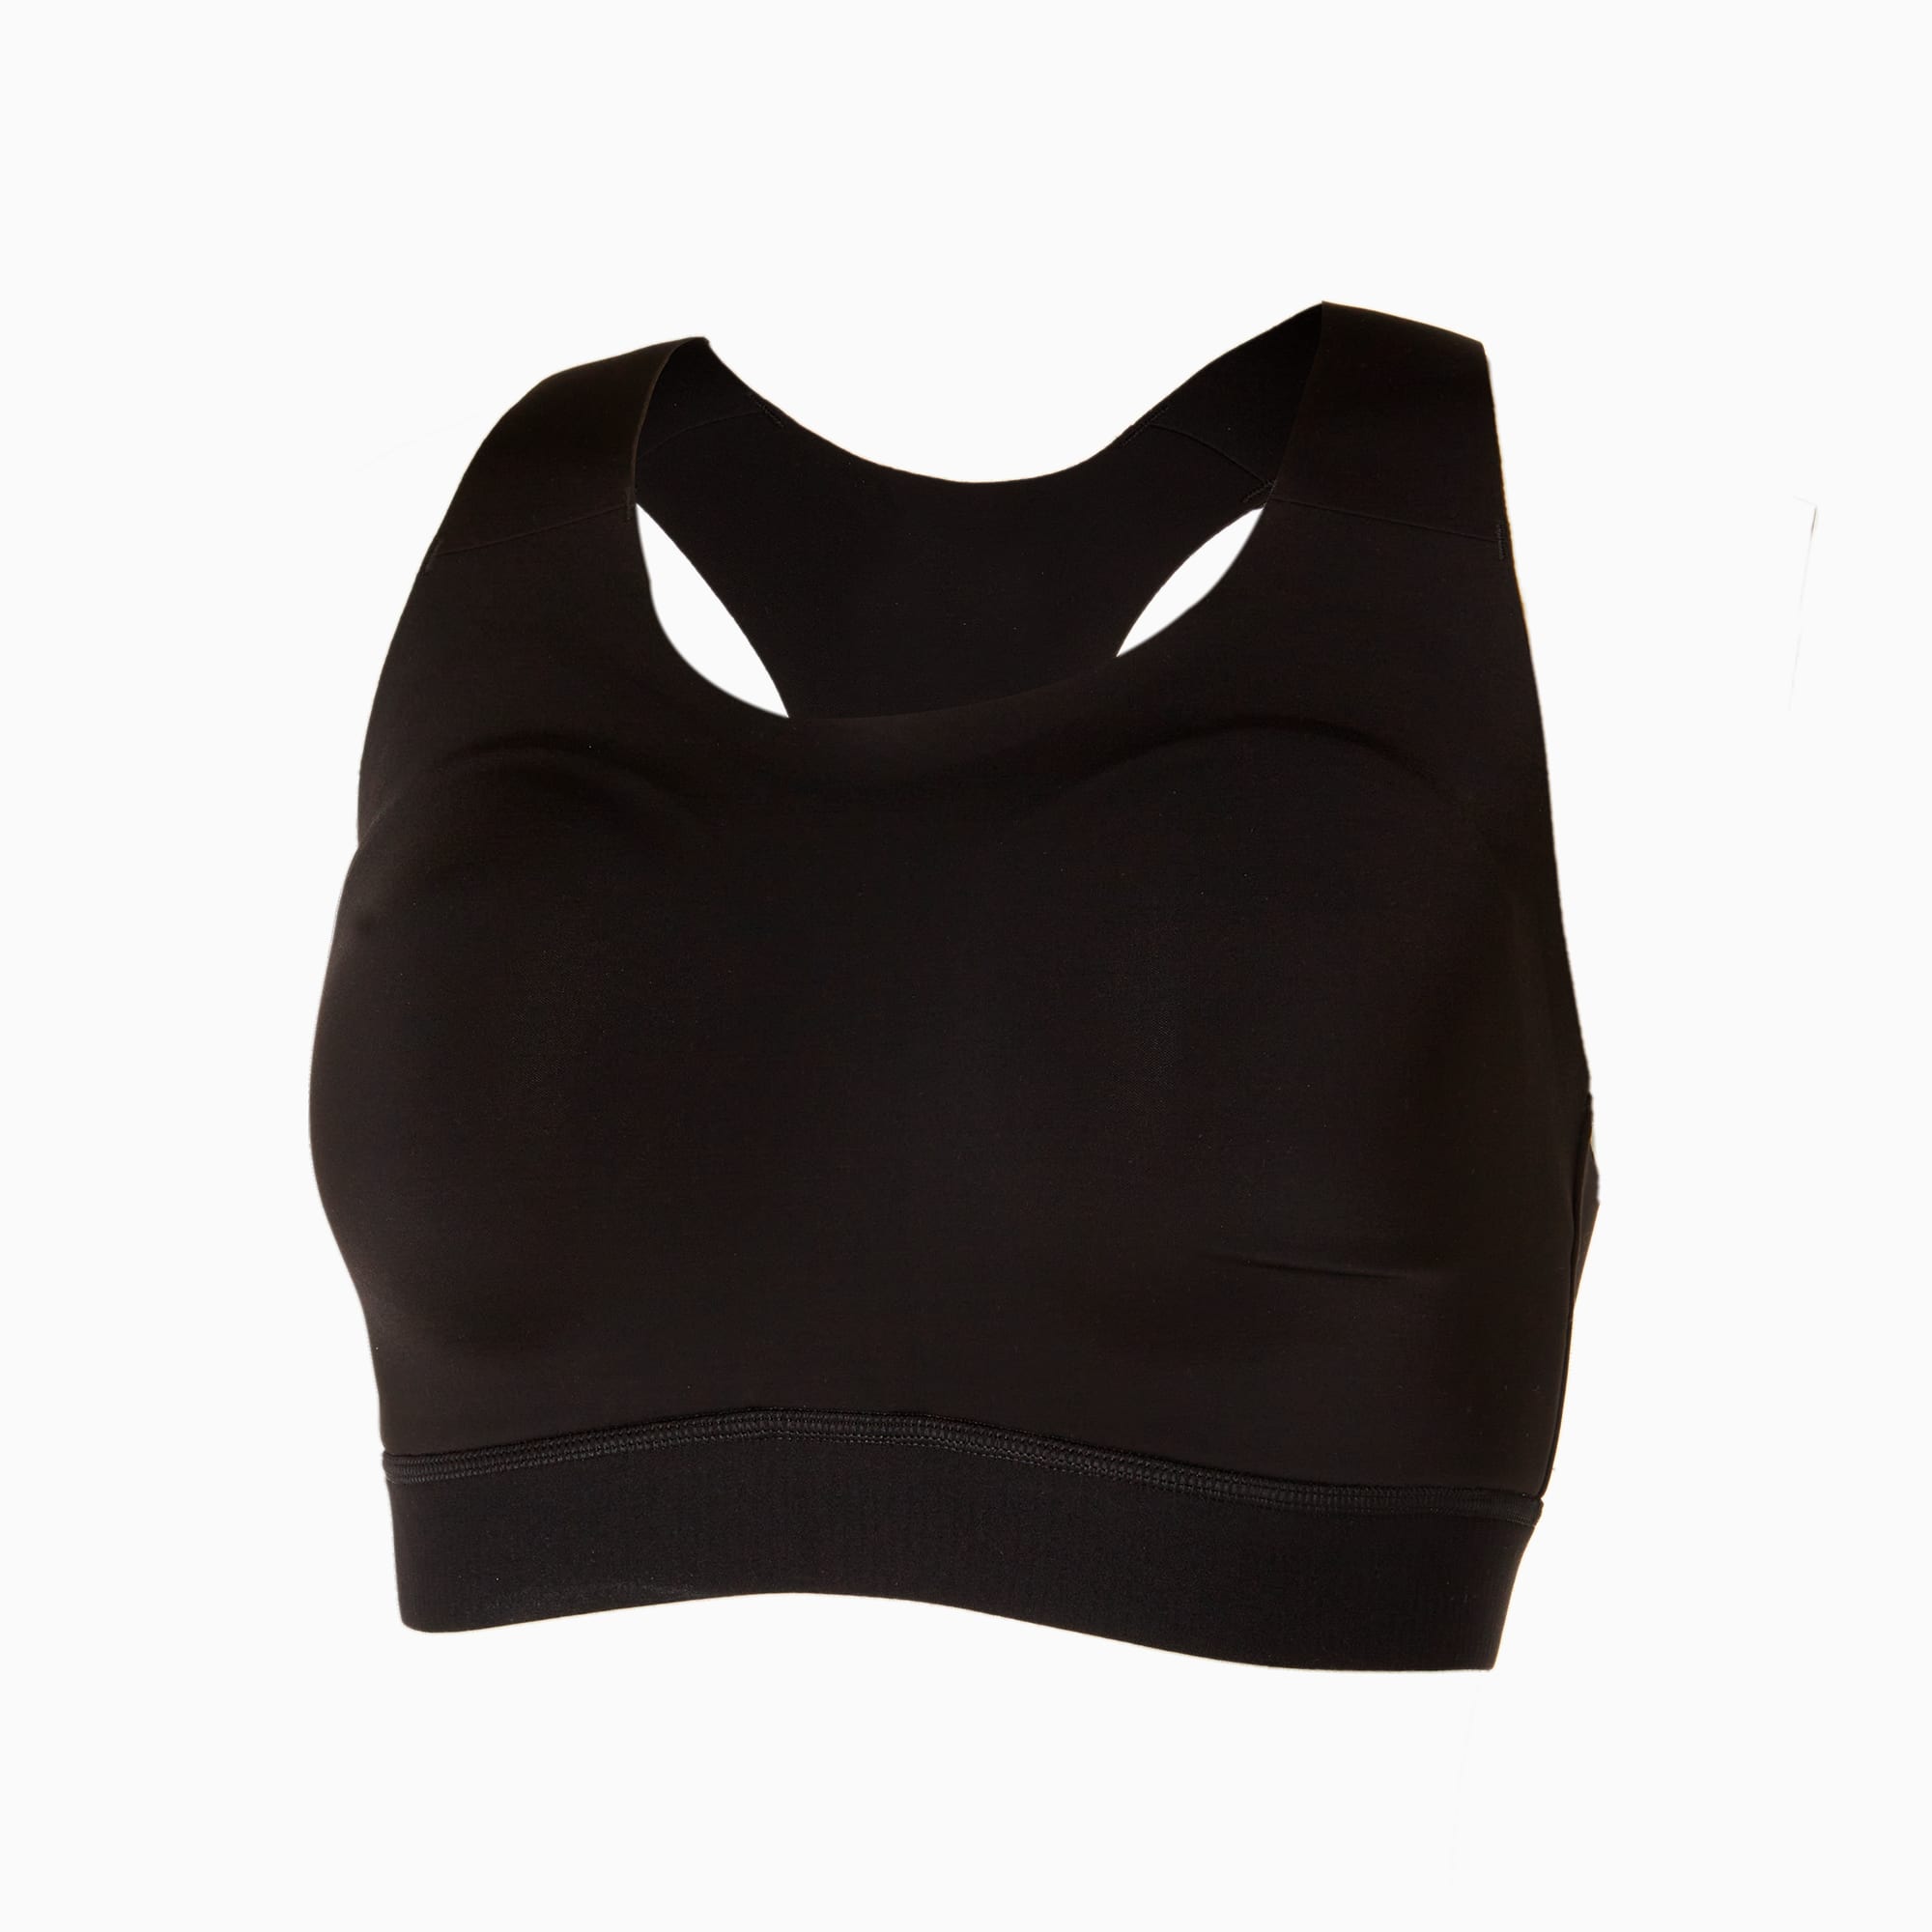 Puma - Women's Performance Seamless Sports Bra In Black! NEVER WORN! Black  Size M - $9 (64% Off Retail) - From Blair